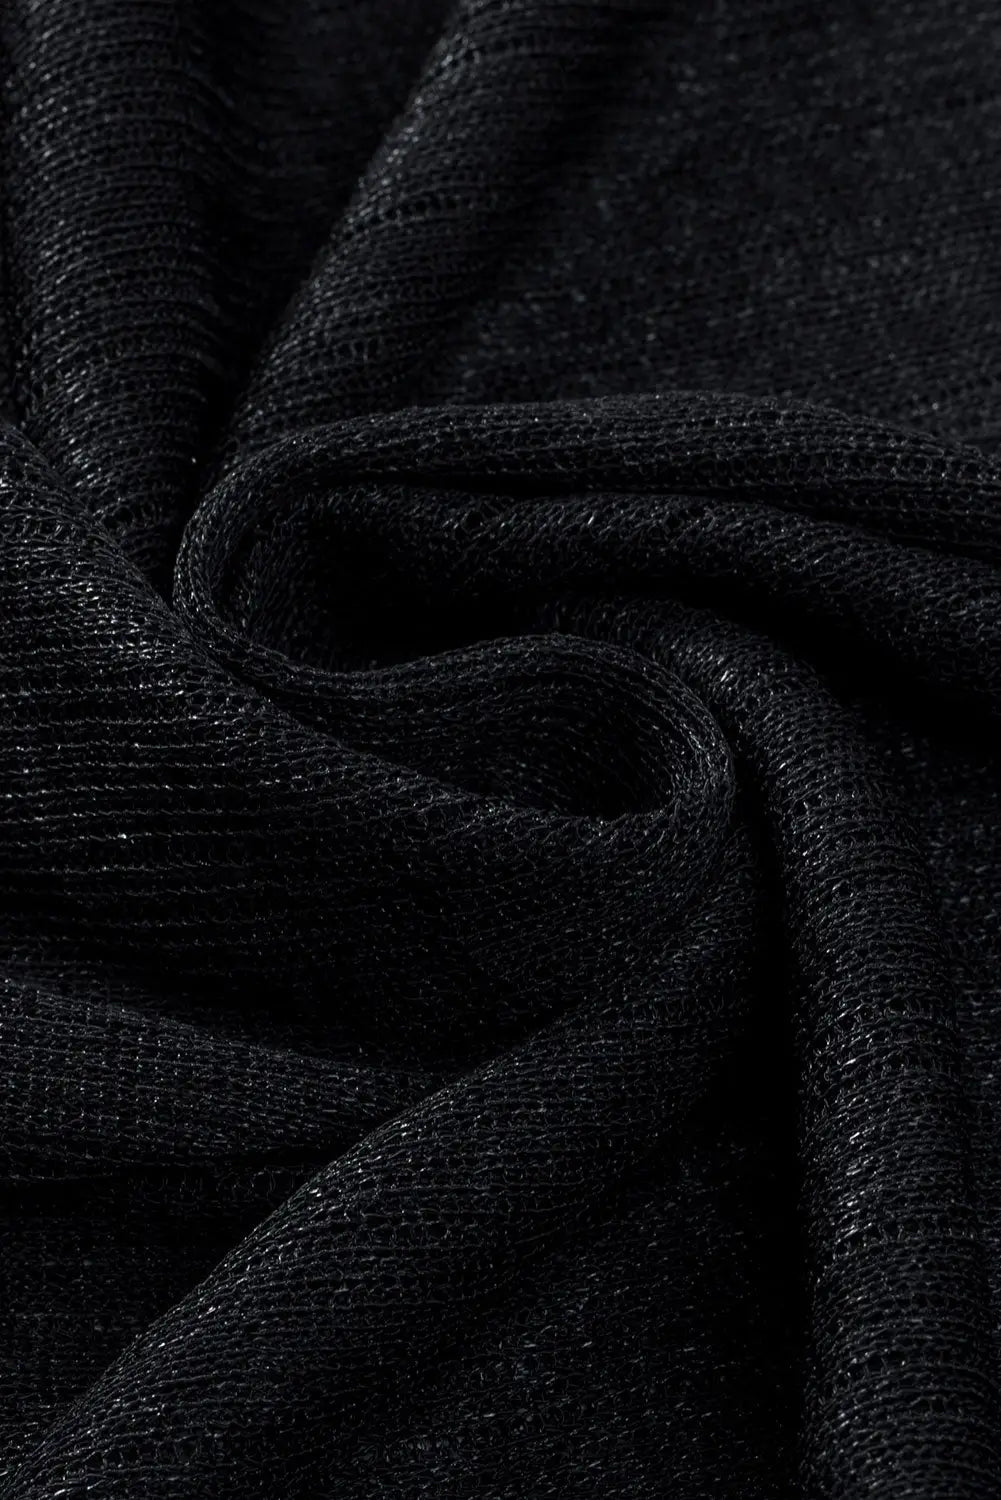 Black sheer lightweight knit long sleeve cardigan - sweaters & cardigans